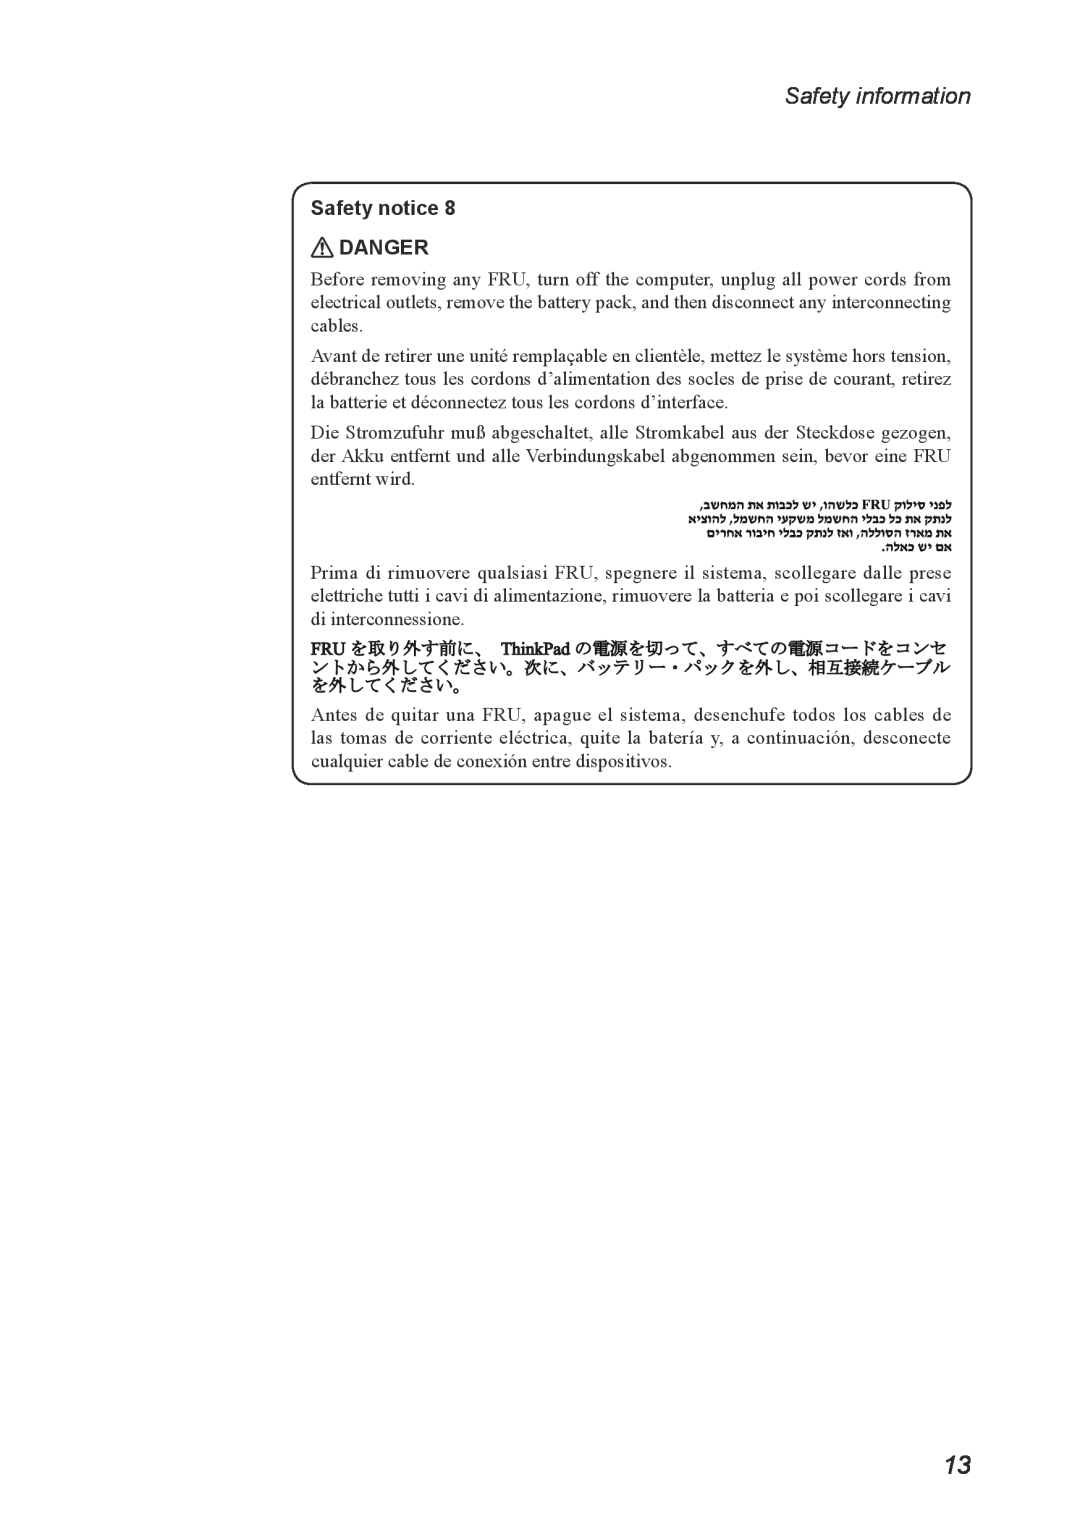 Lenovo U300E manual Safety information, Safety notice DANGER 